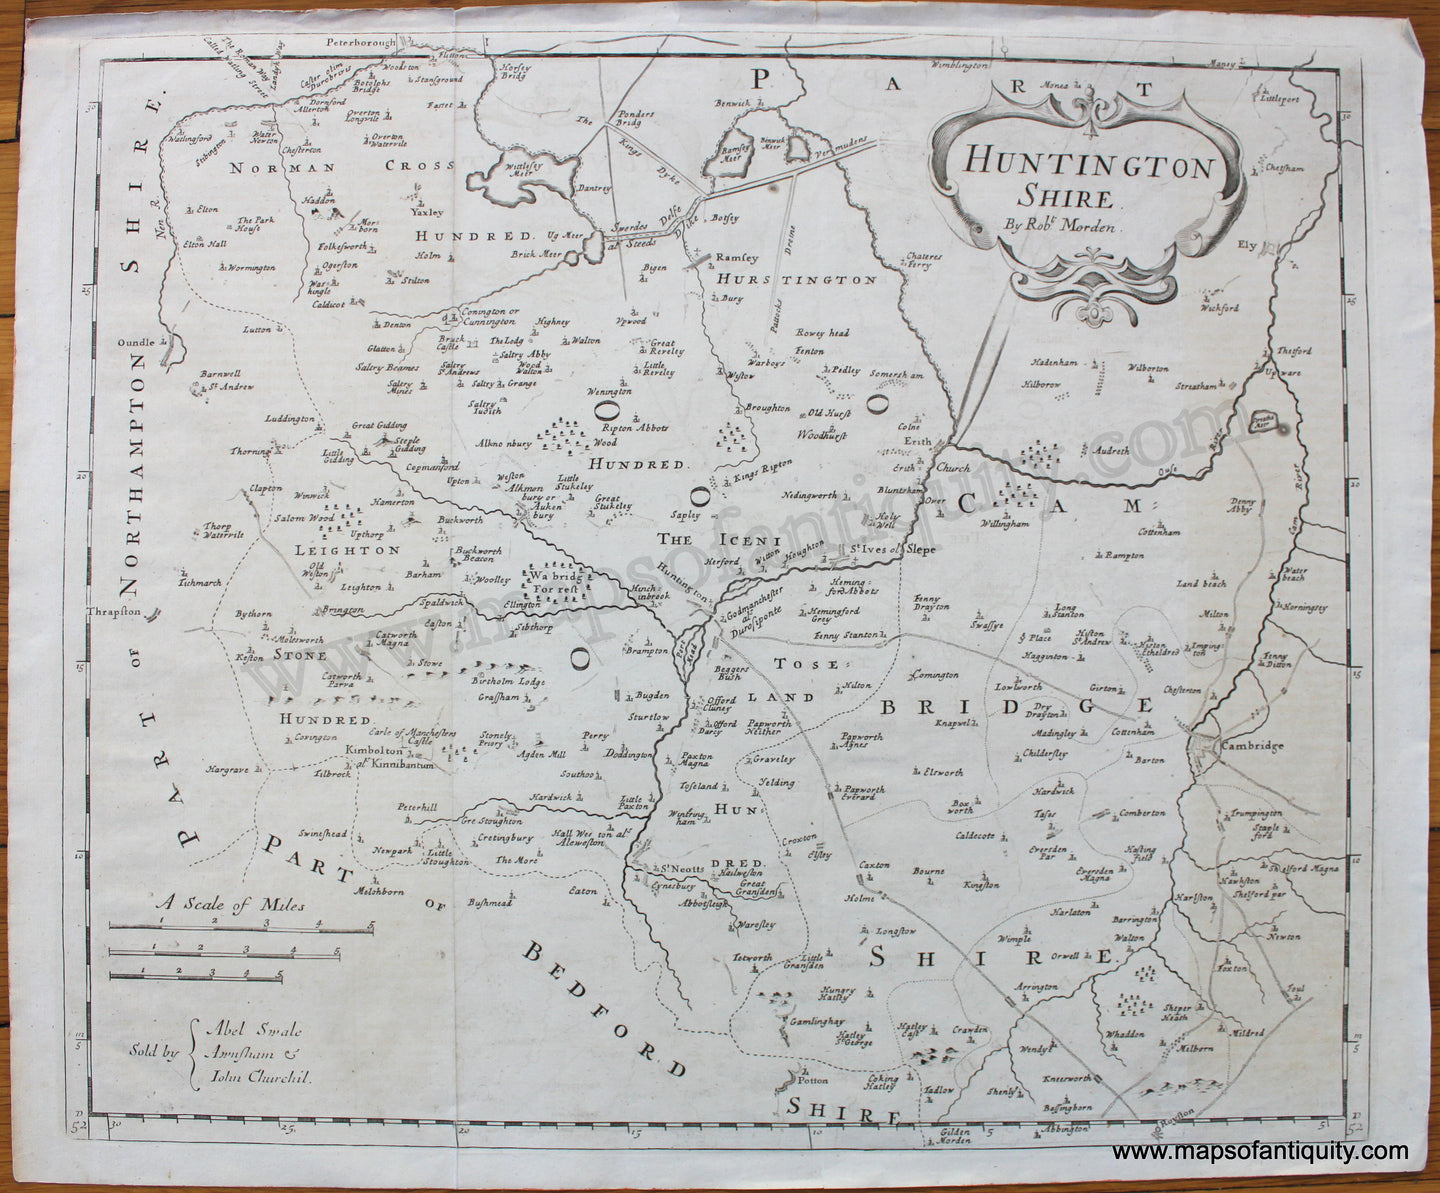 Black-and-White-Antique-Map-circa-1722-Morden-Huntington-Shire.-By-Robt.-Morden.-United-Kingdom